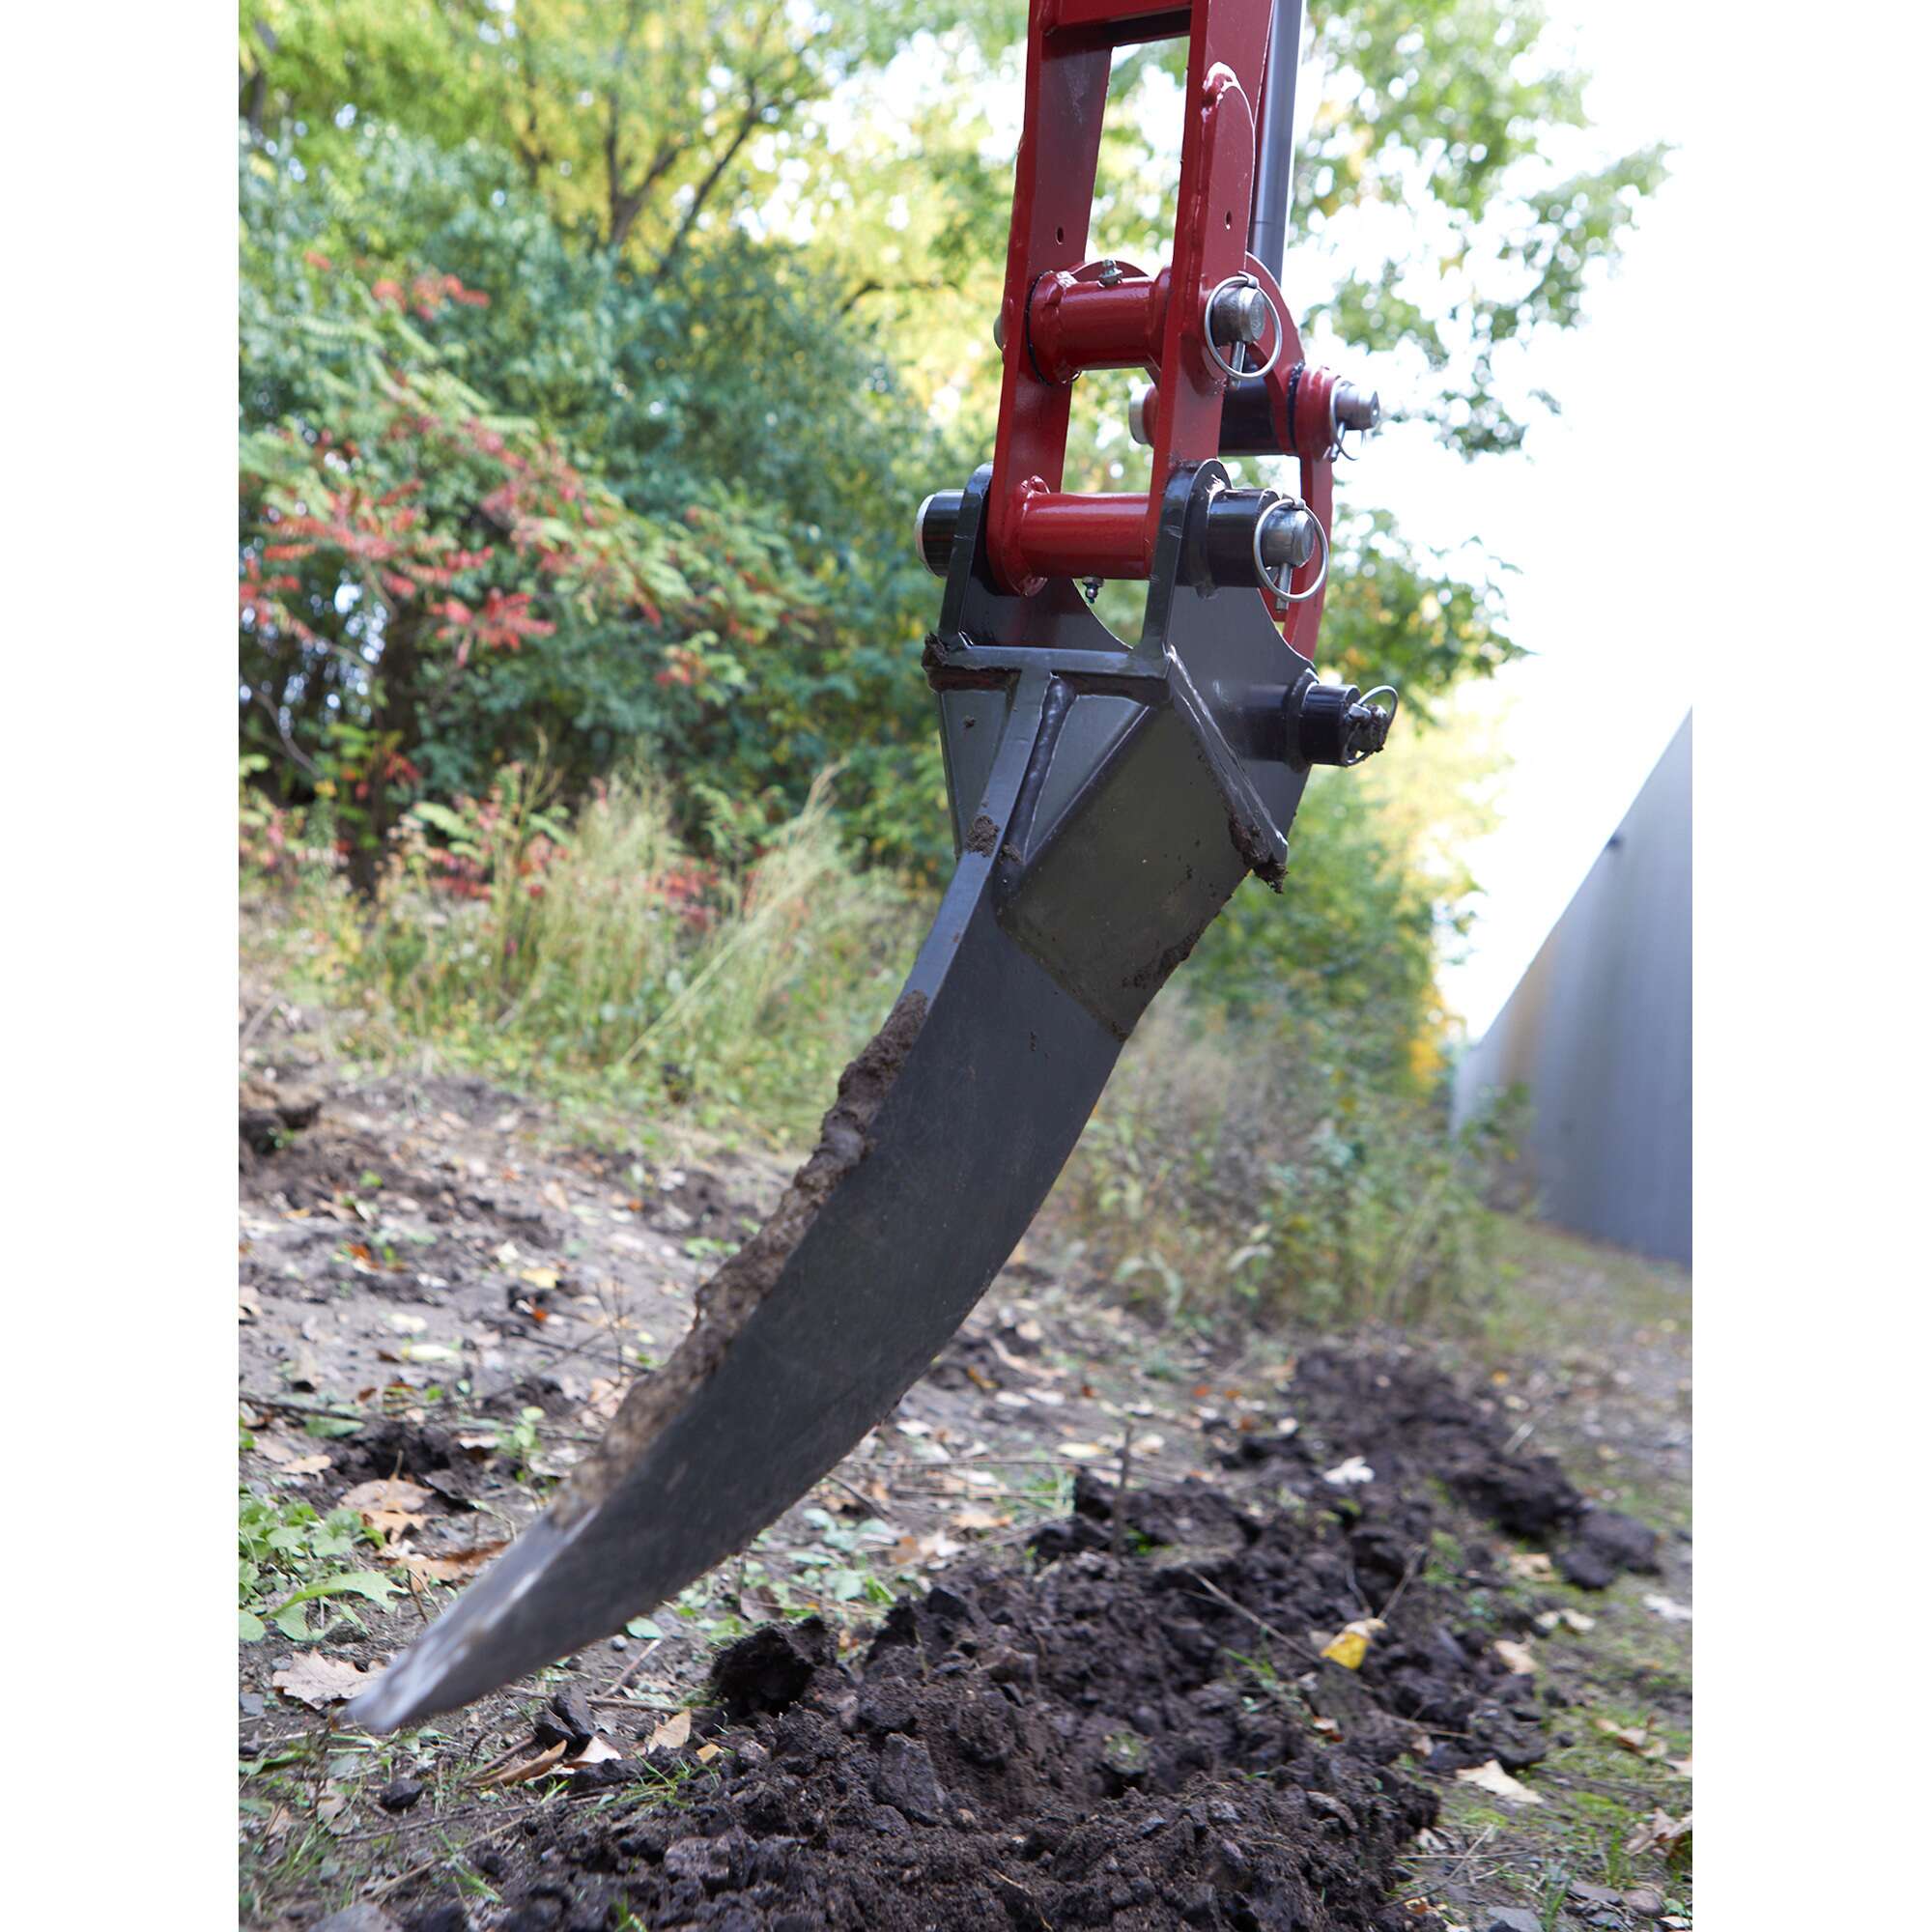 NorTrac Mini Excavator Narrow Bucket Attachment 352Lb Capacity